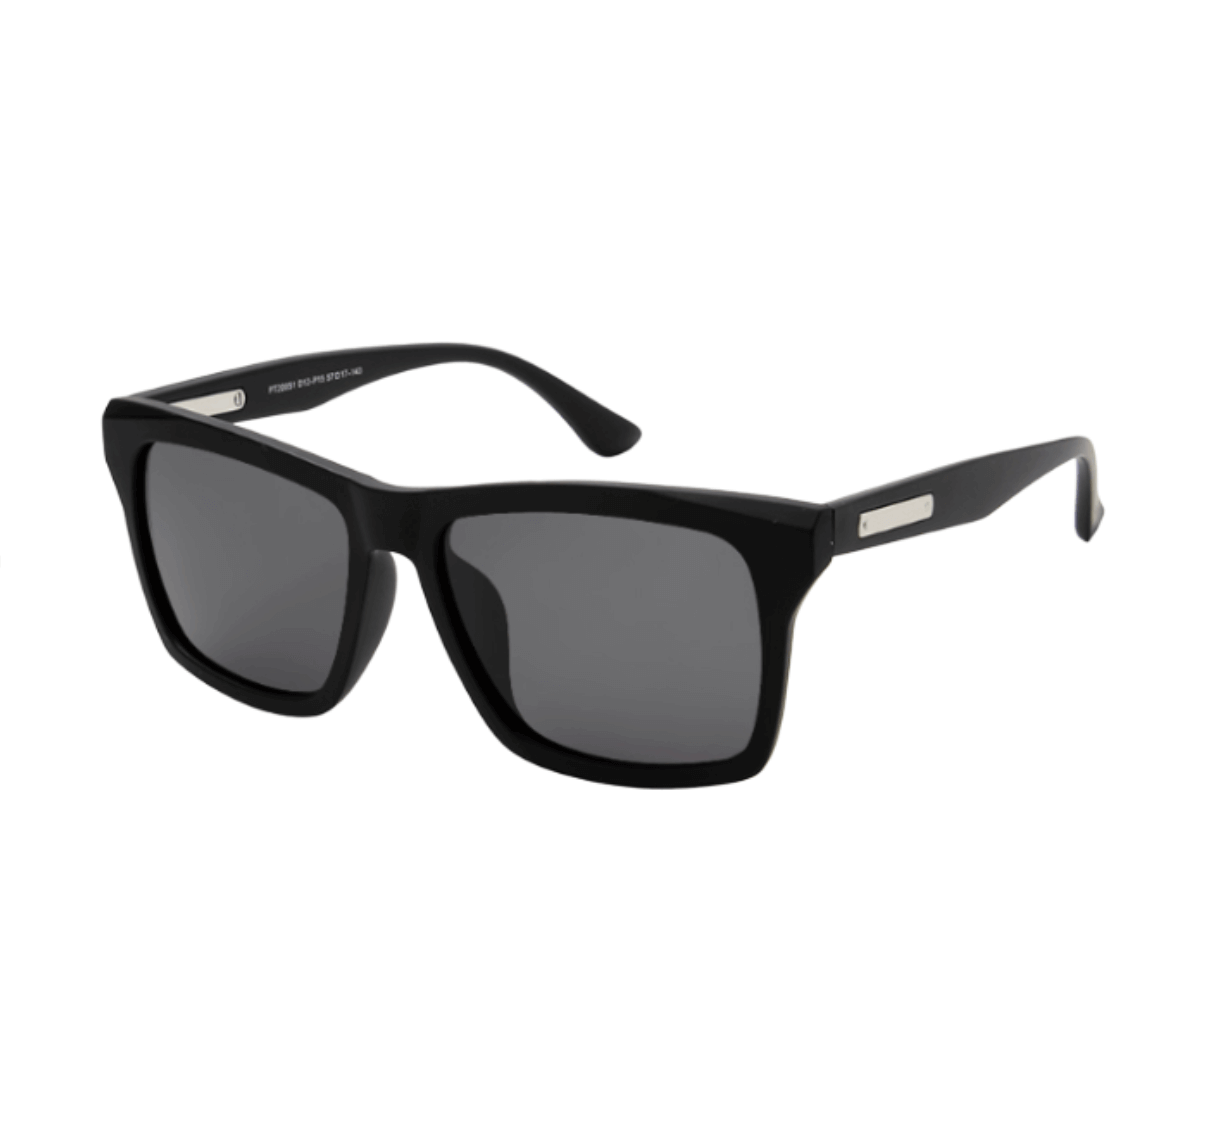 plastic sunglasses wholesale, cheap plastic sunglasses bulk, sunglasses vendor wholesale, buy wholesale sunglasses, Sunglasses Manufacturer